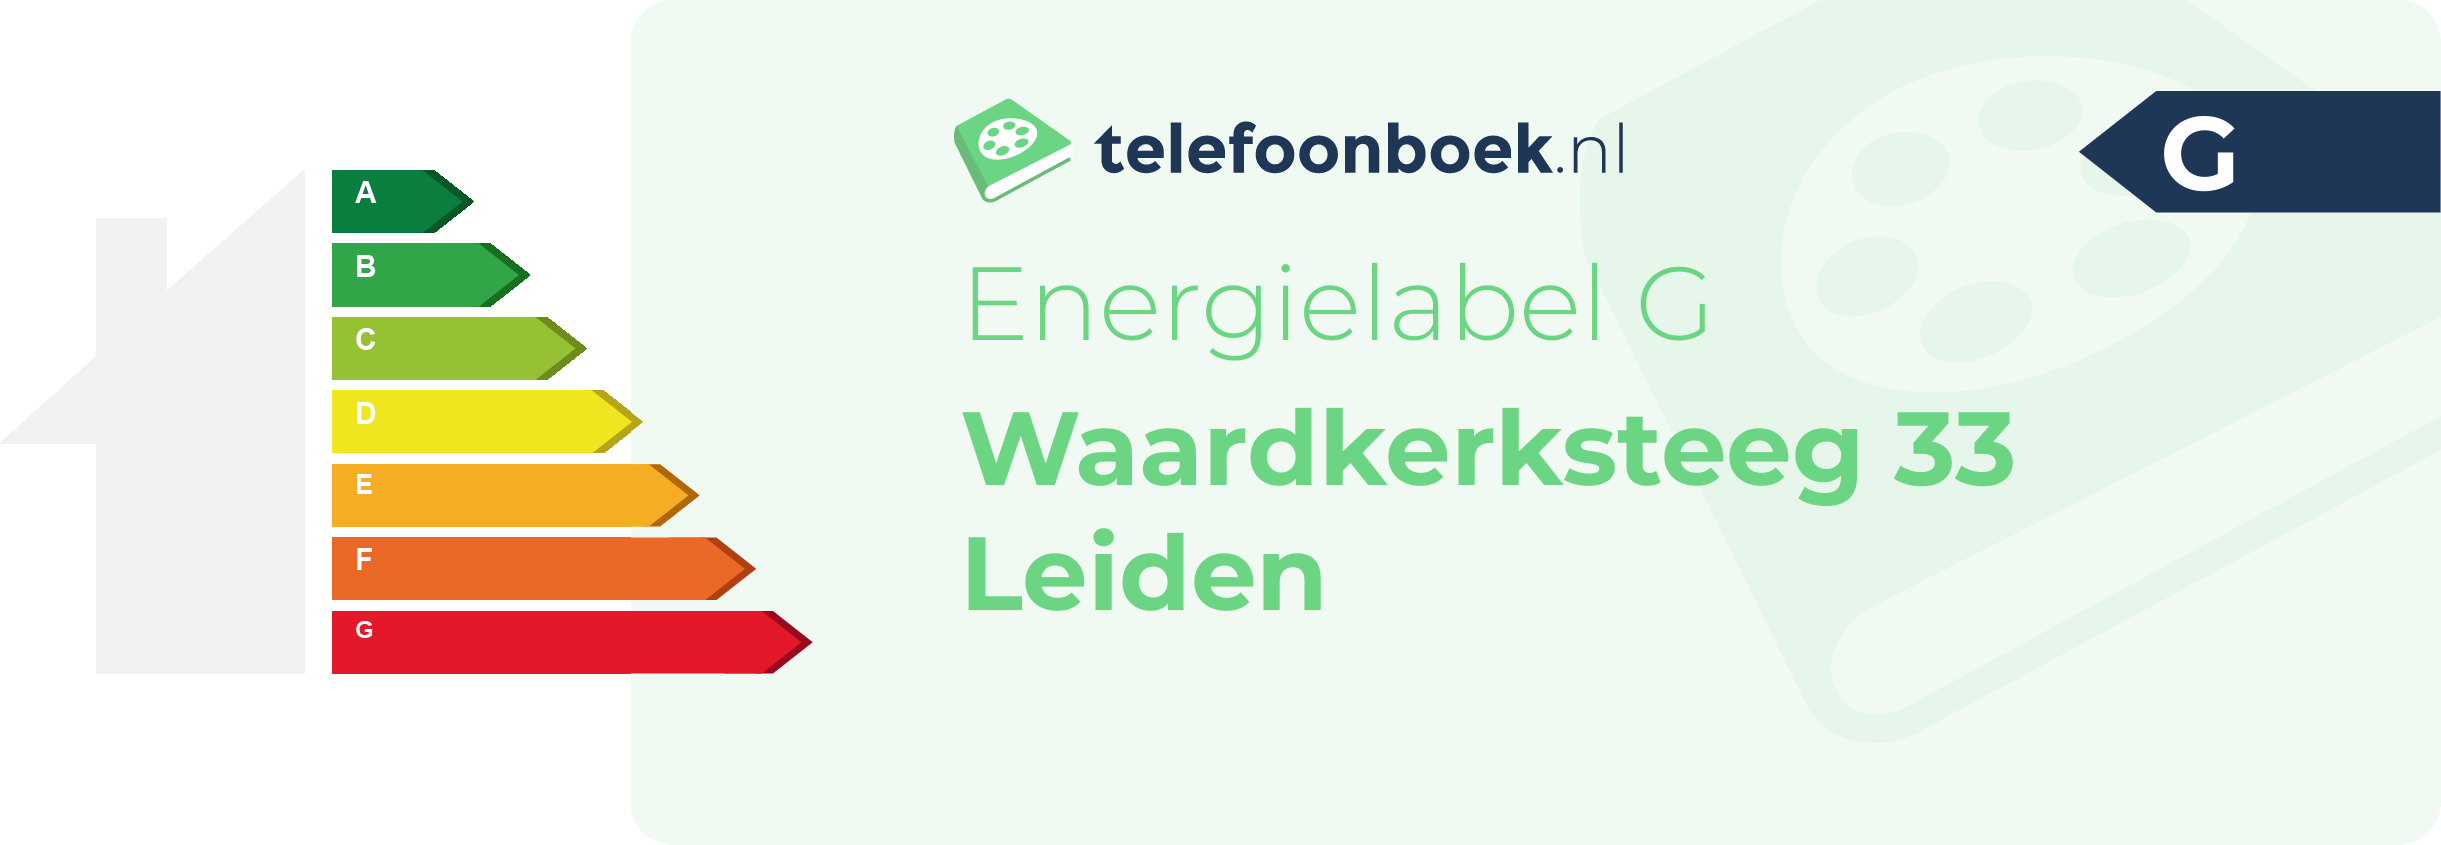 Energielabel Waardkerksteeg 33 Leiden